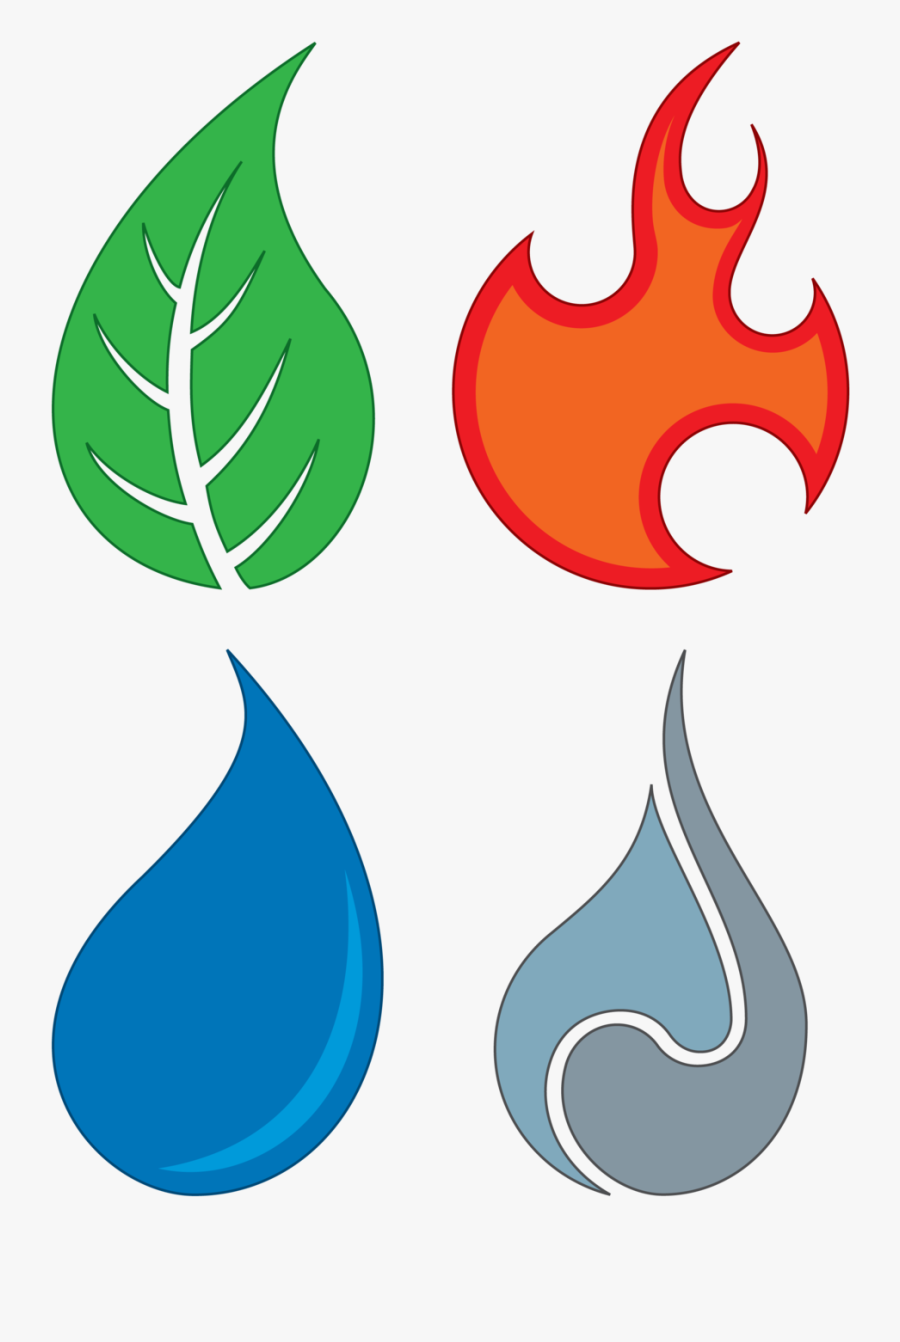 Japanese Elements Png Transparent Image - Four Elements Symbols Transparent, Transparent Clipart